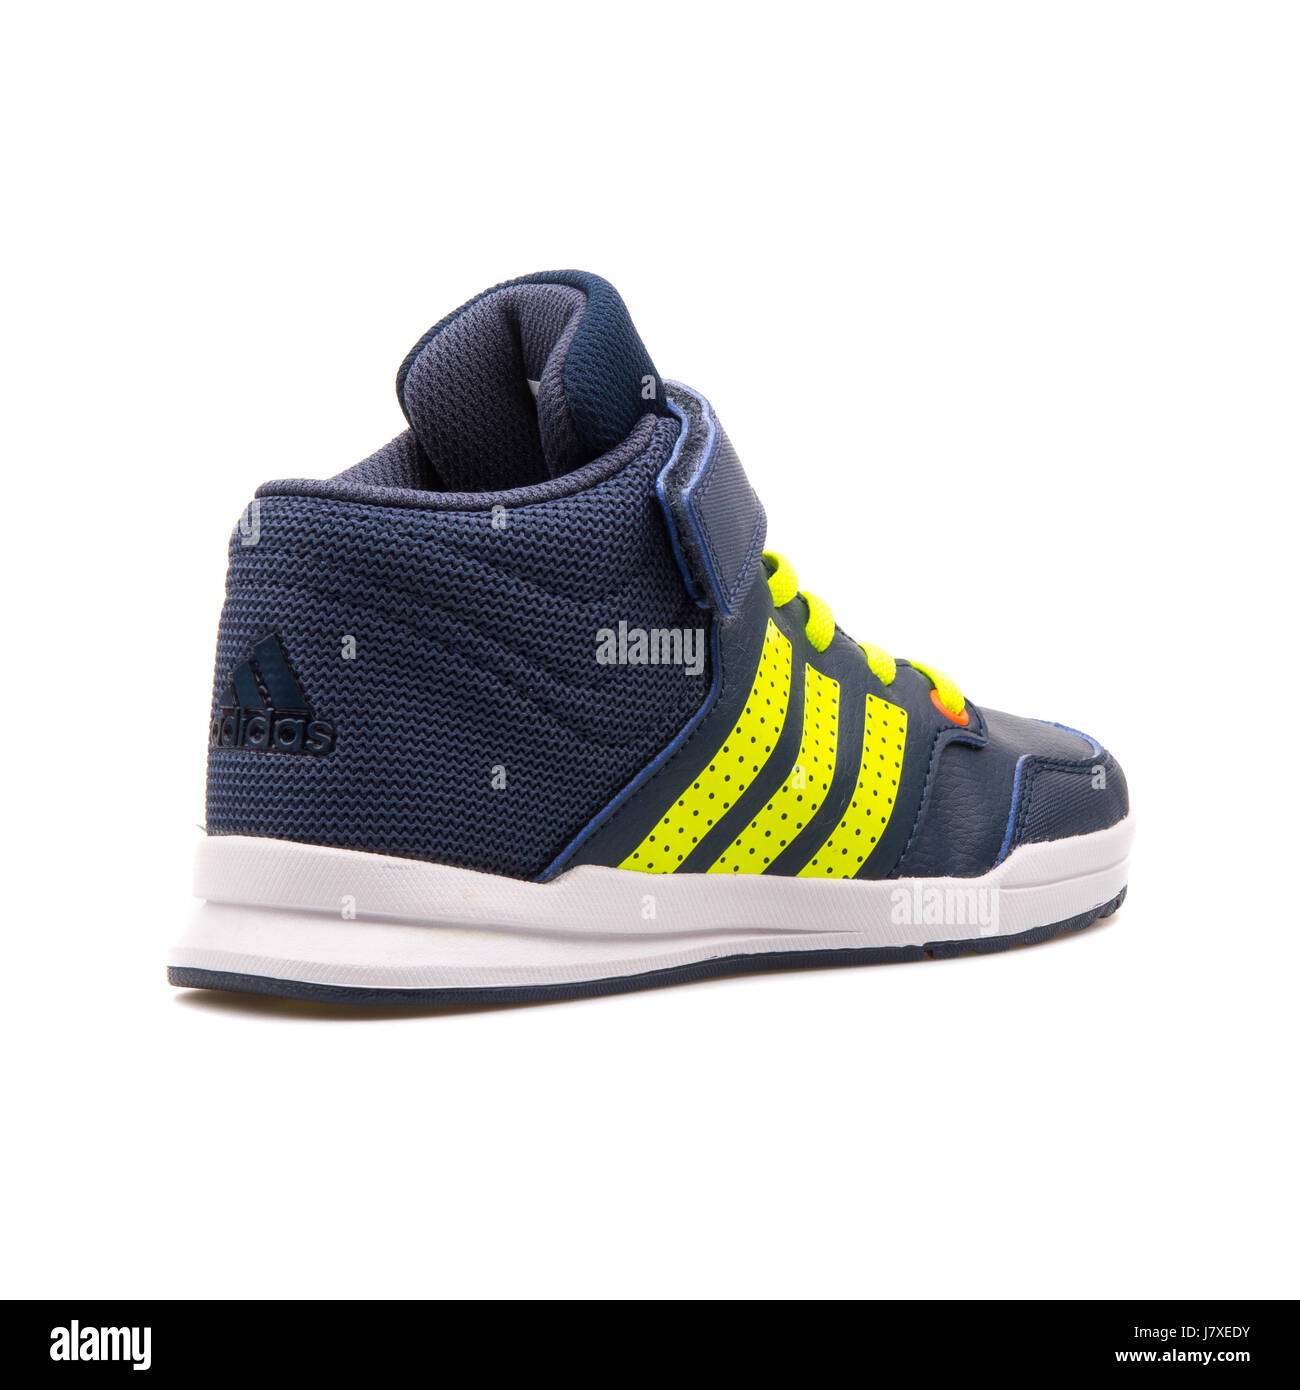 Adidas Jan BS 2 mid C Kids Blue Sneakers - B23907 Stock Photo - Alamy